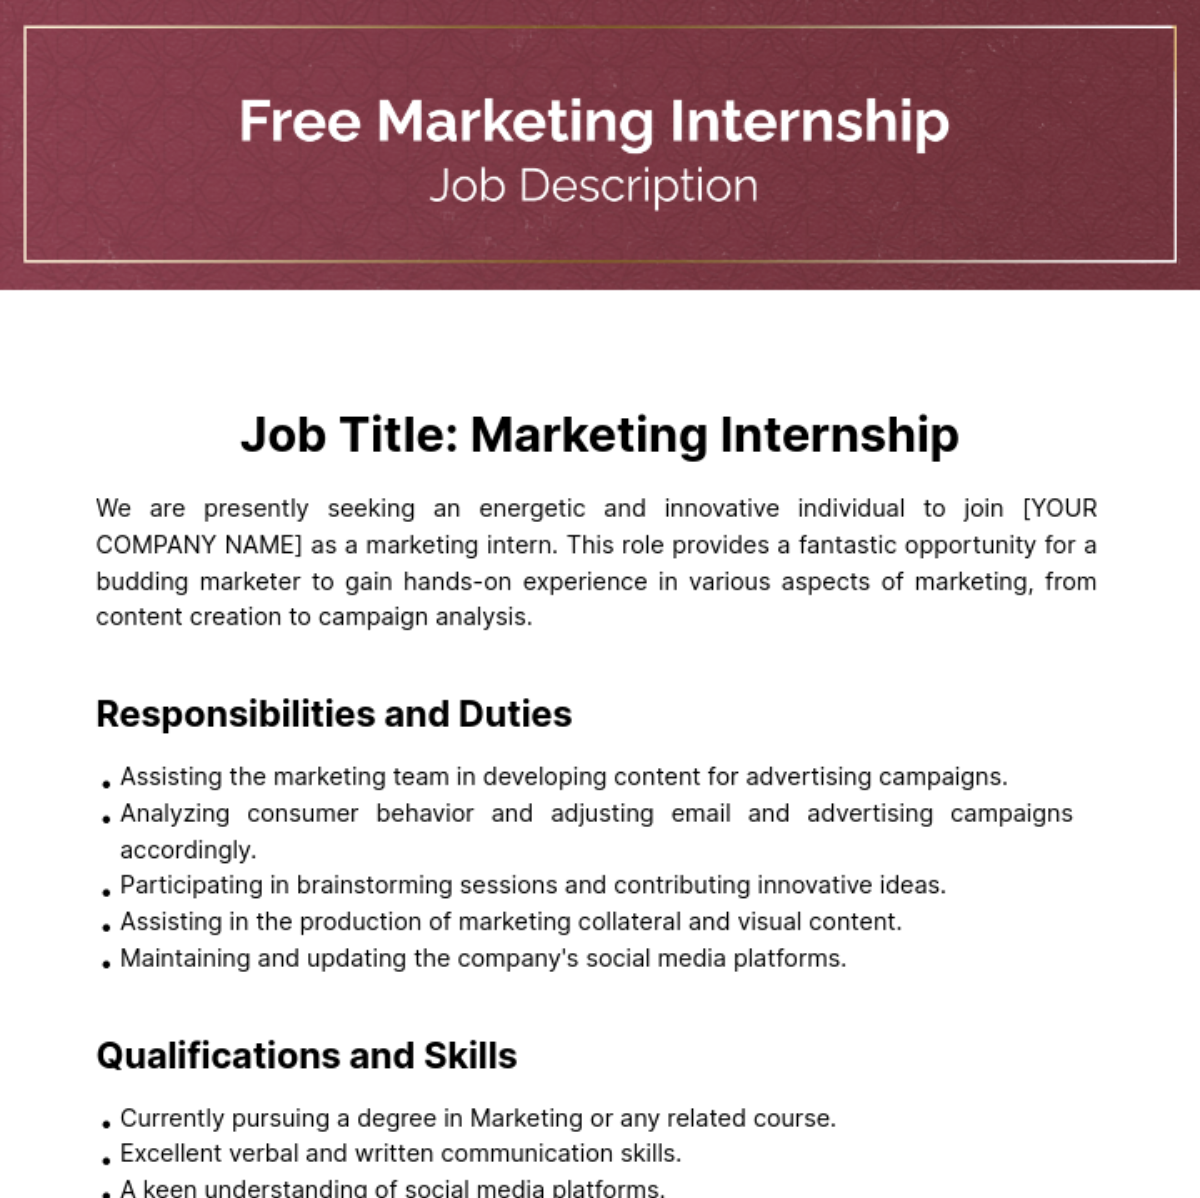 Free Marketing Internship Job Description Template